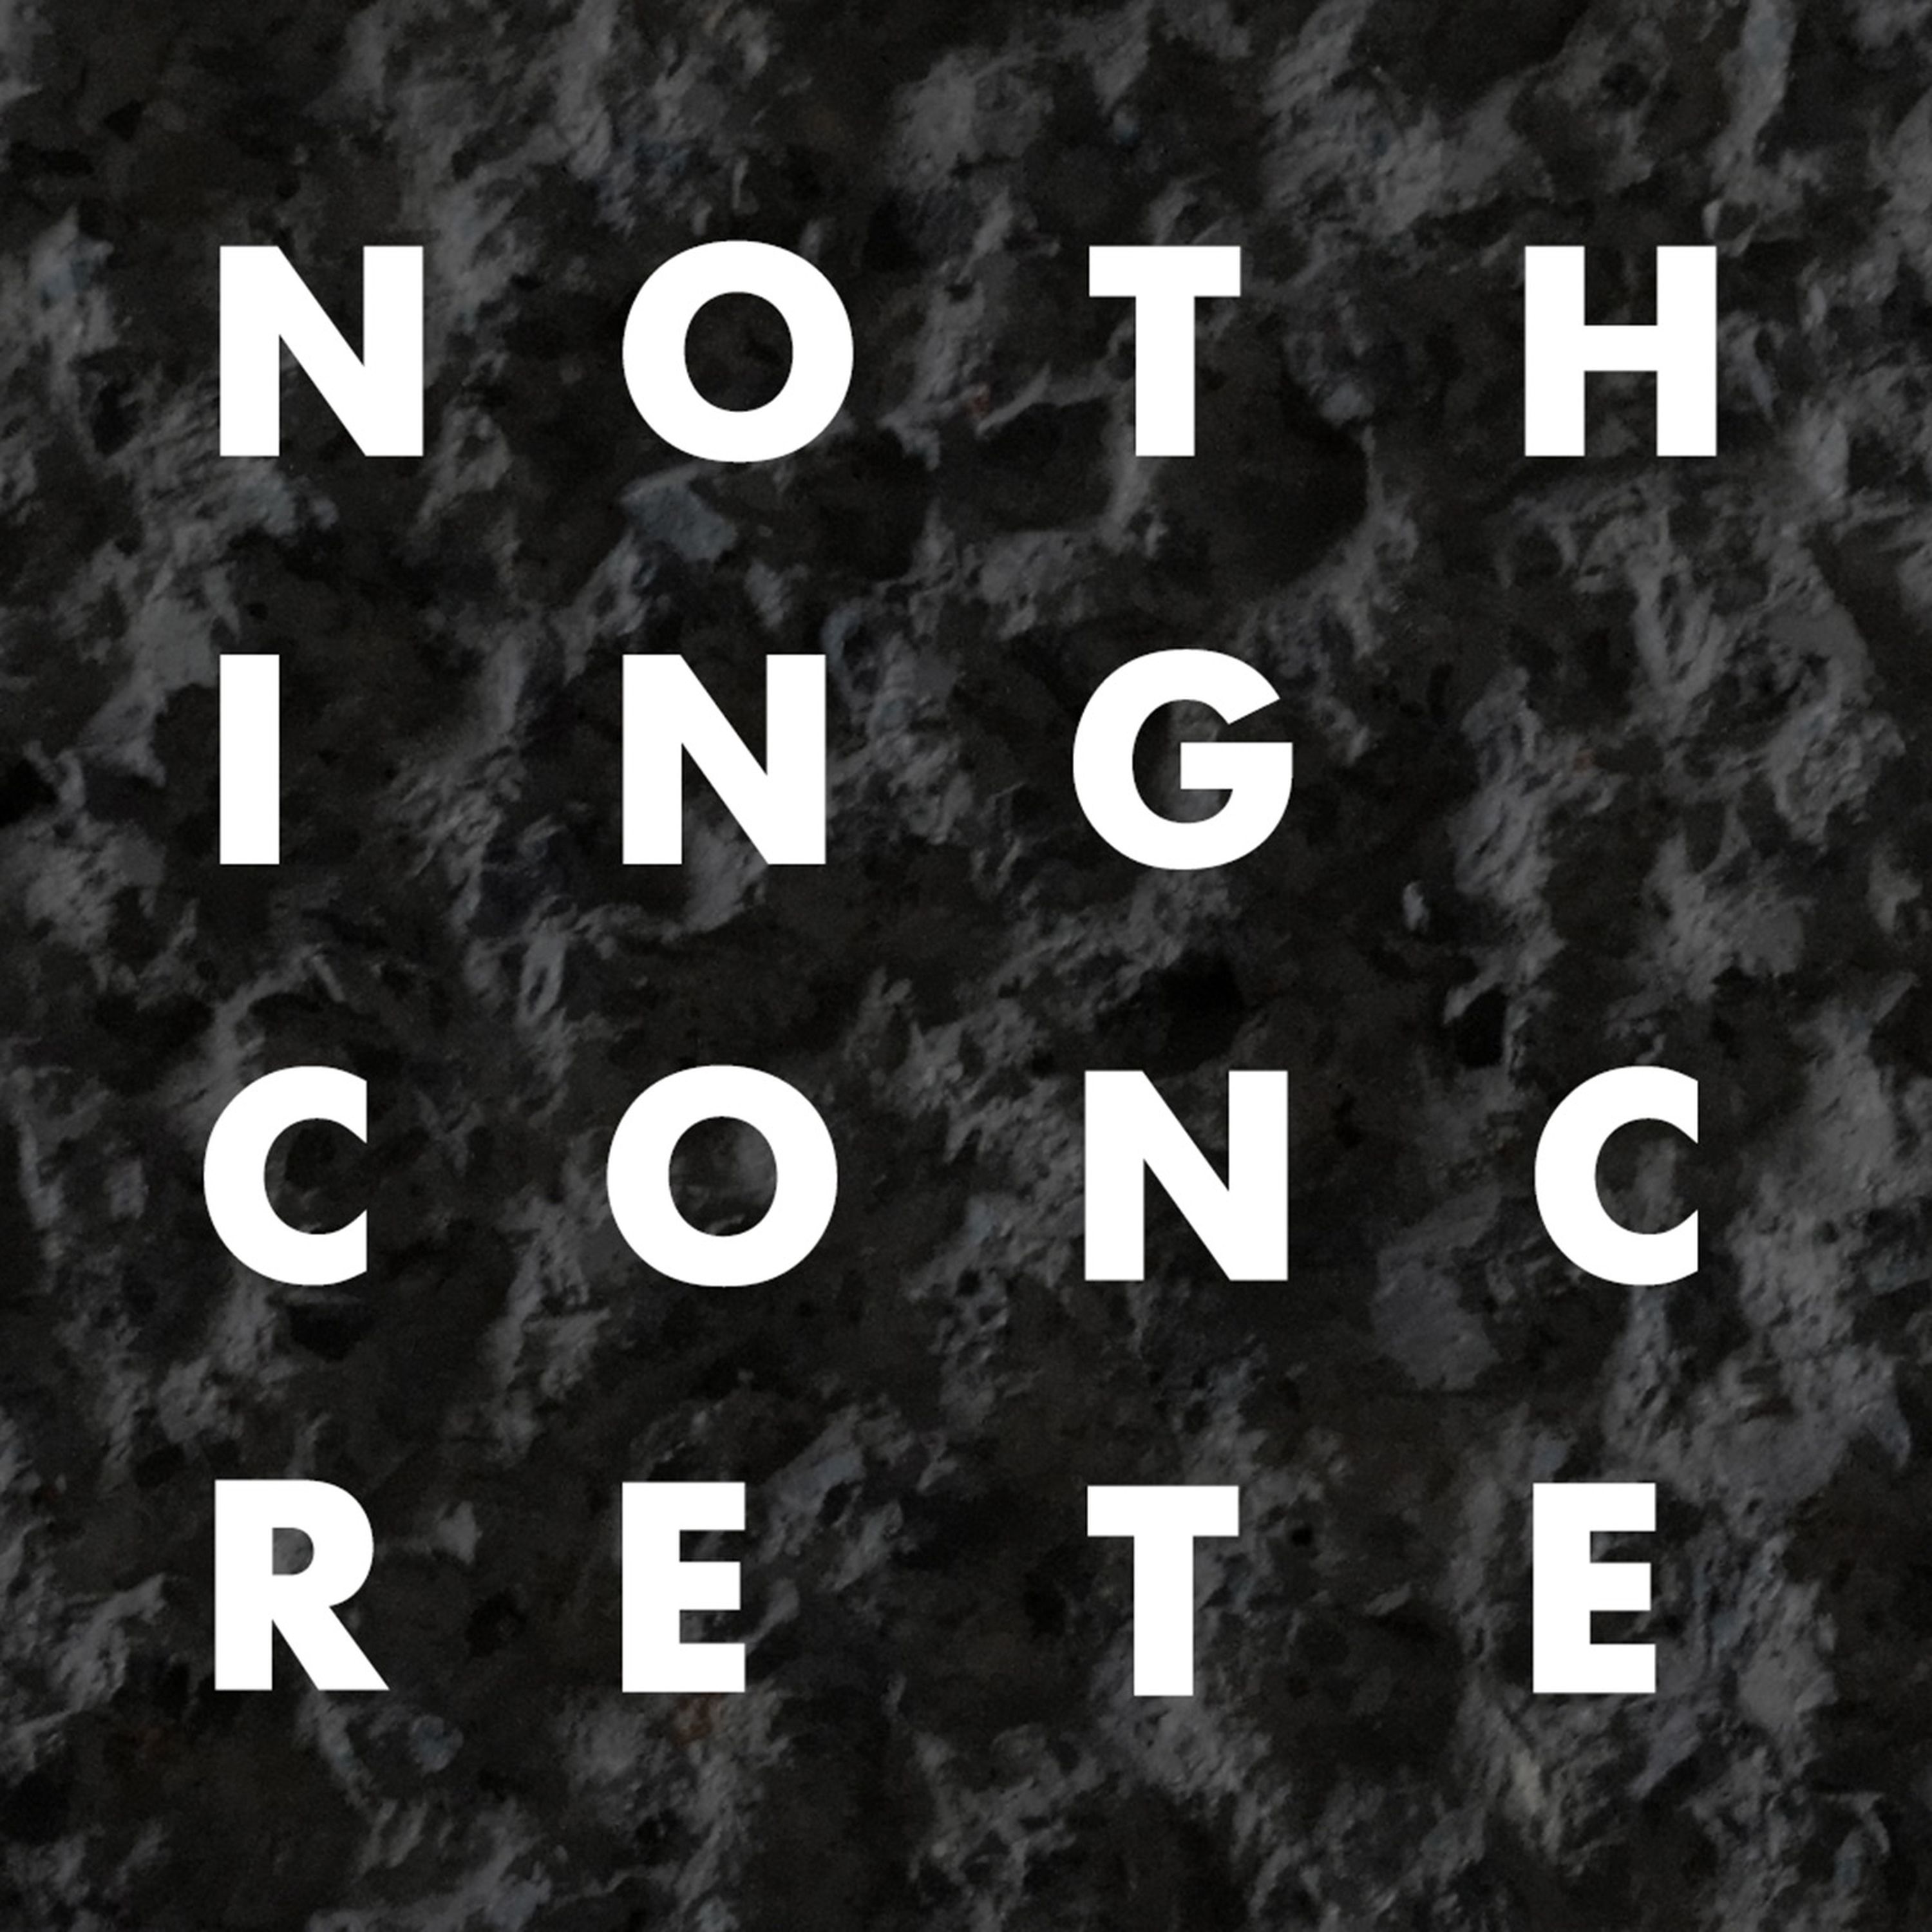 Trailer: Sound Unbound on Nothing Concrete